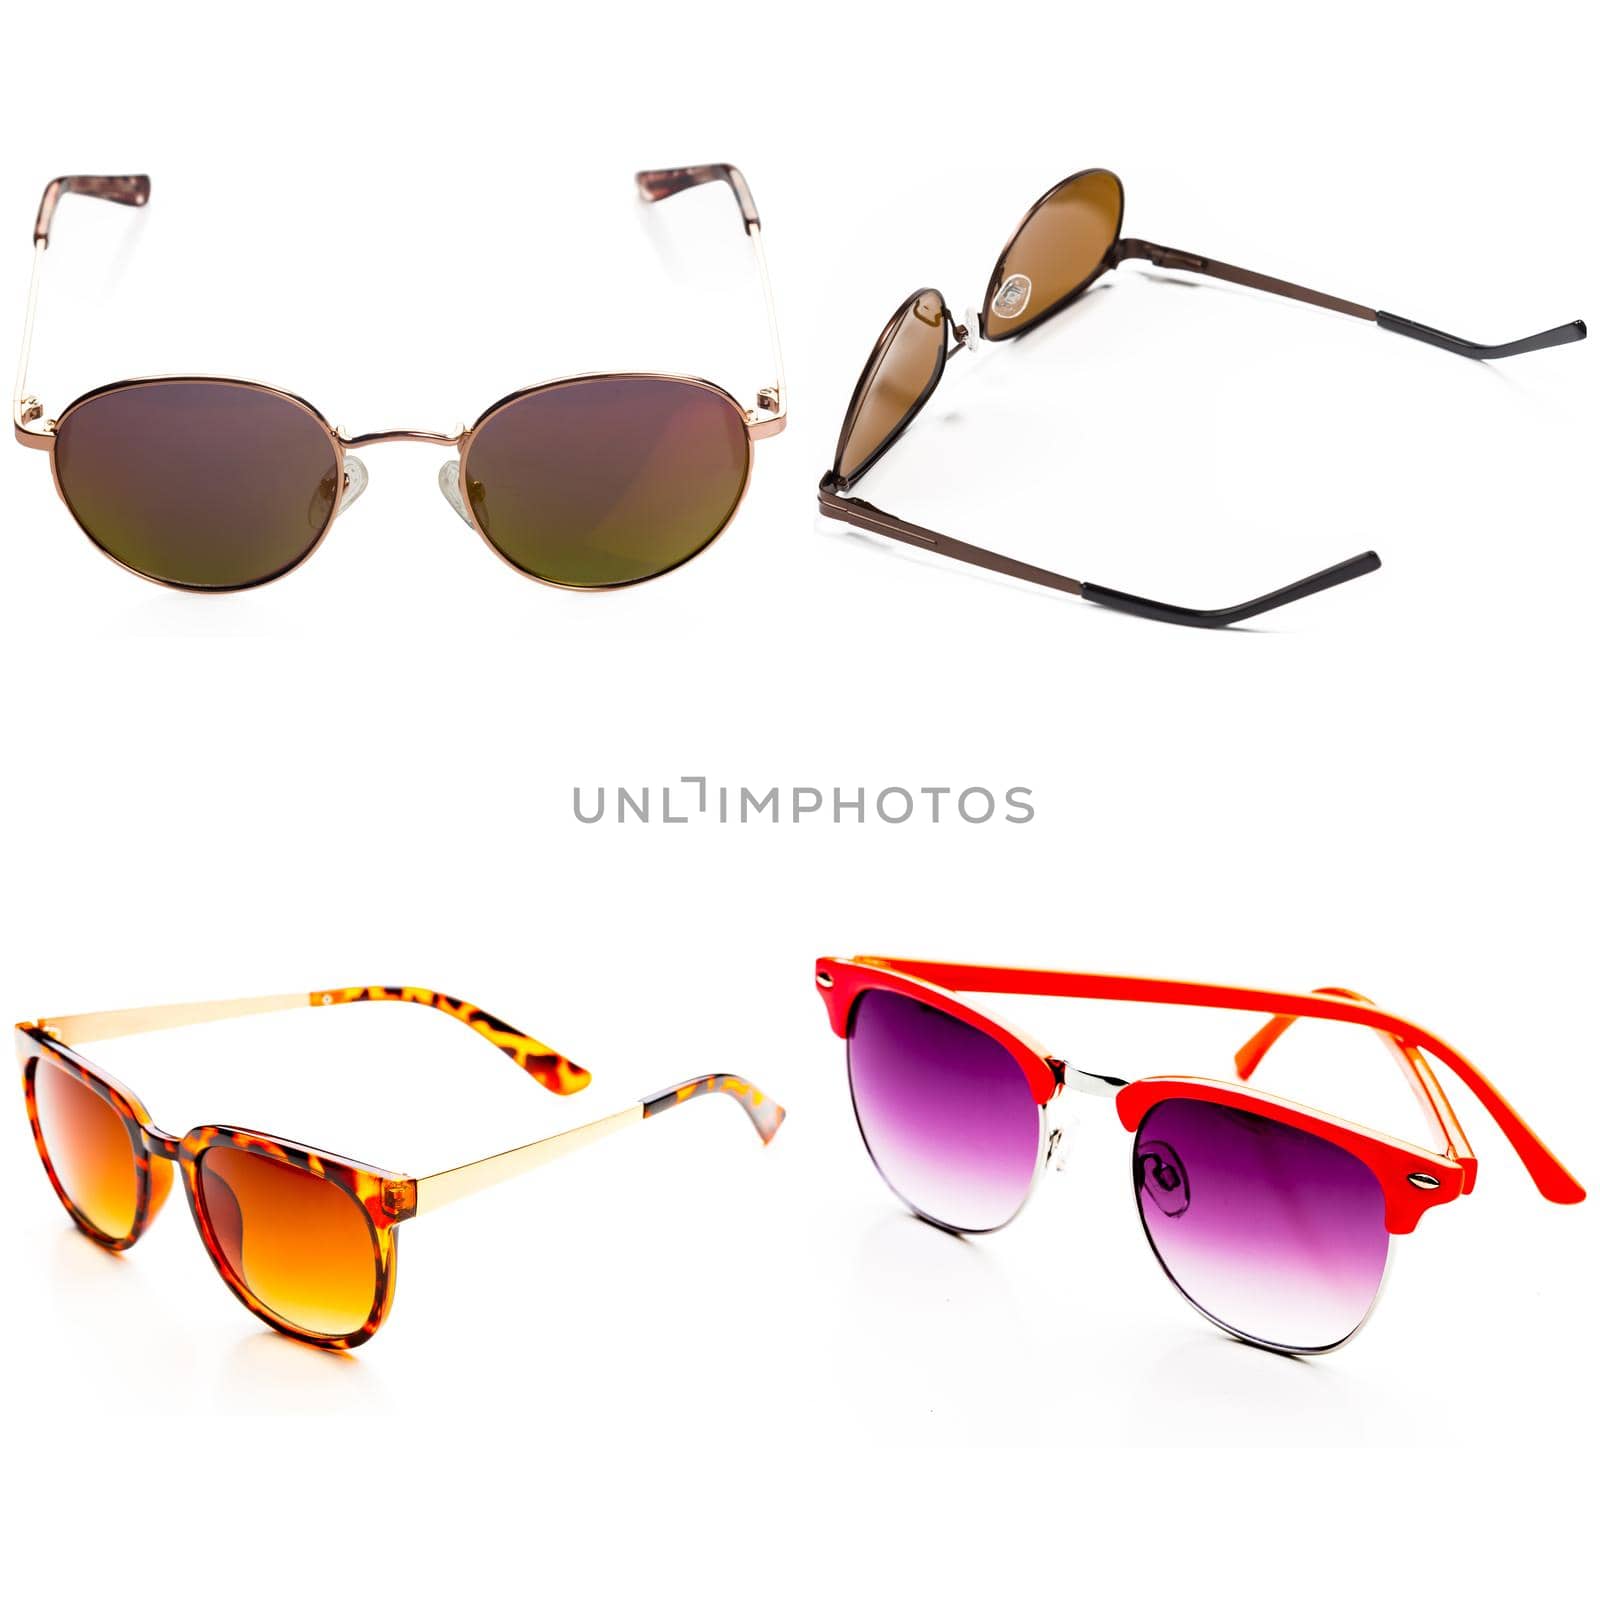 Set of sunglasses isolated on white background by Fabrikasimf